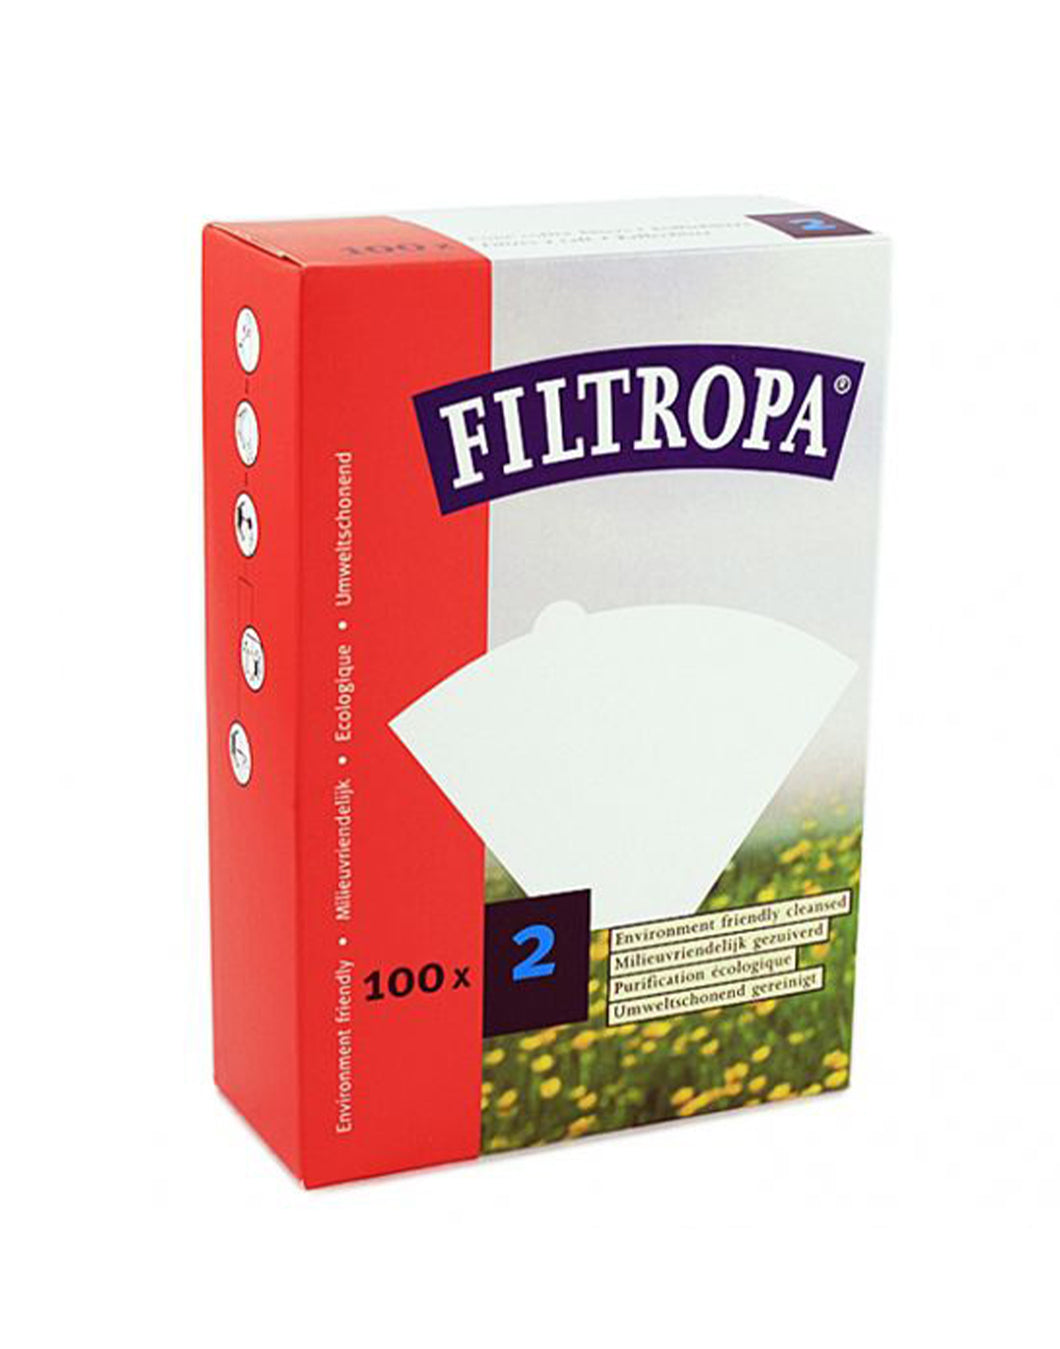 Filtropa Filter | فلاتر فلتروبا